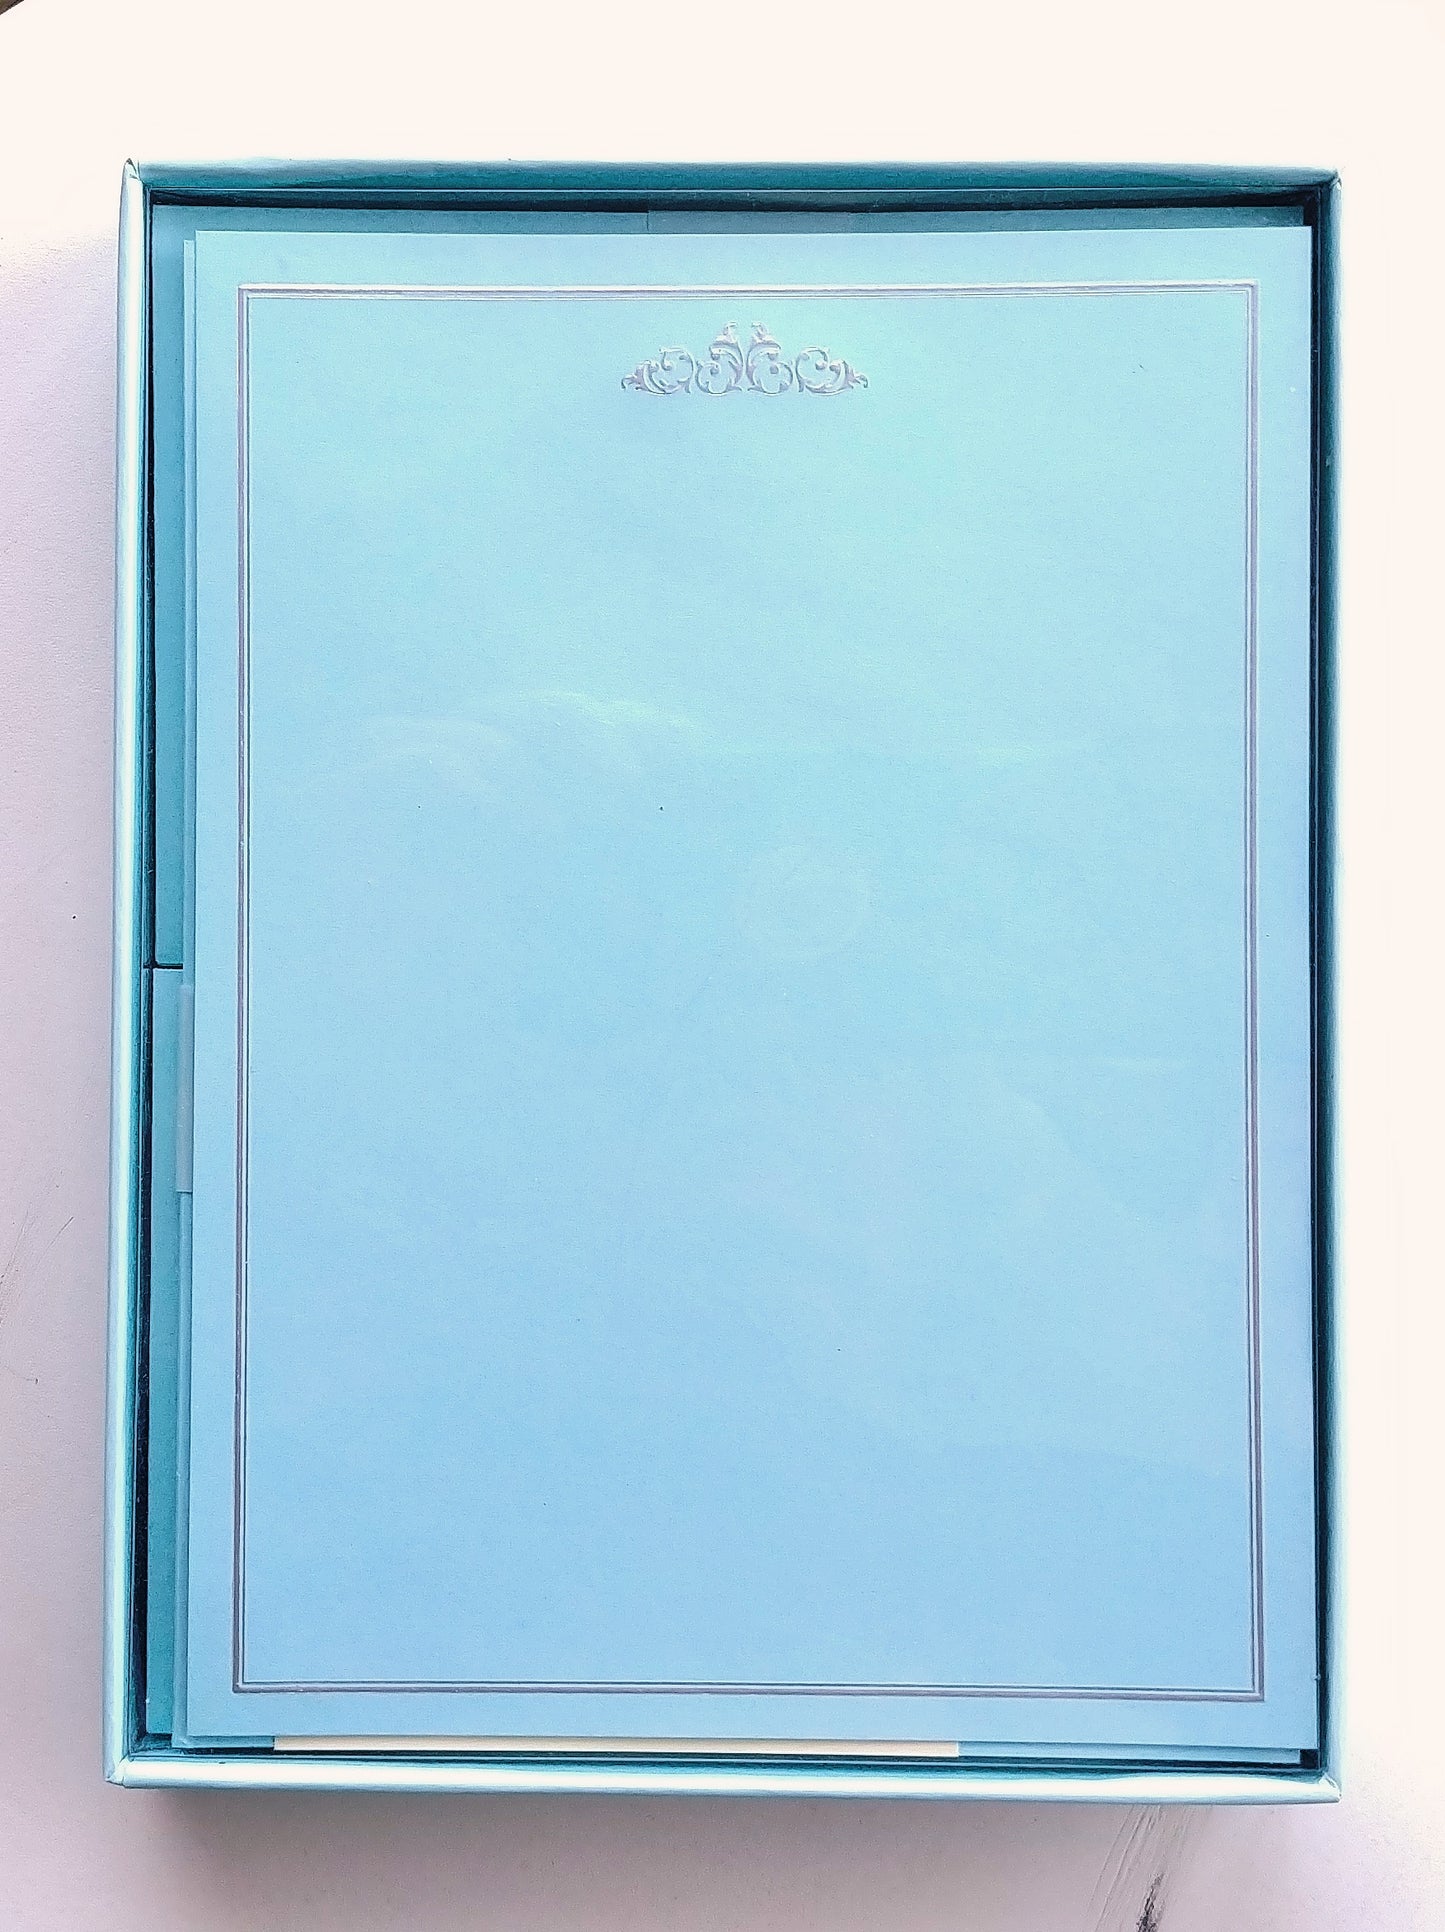 Blue Elegance Boxed Stationery  #2509